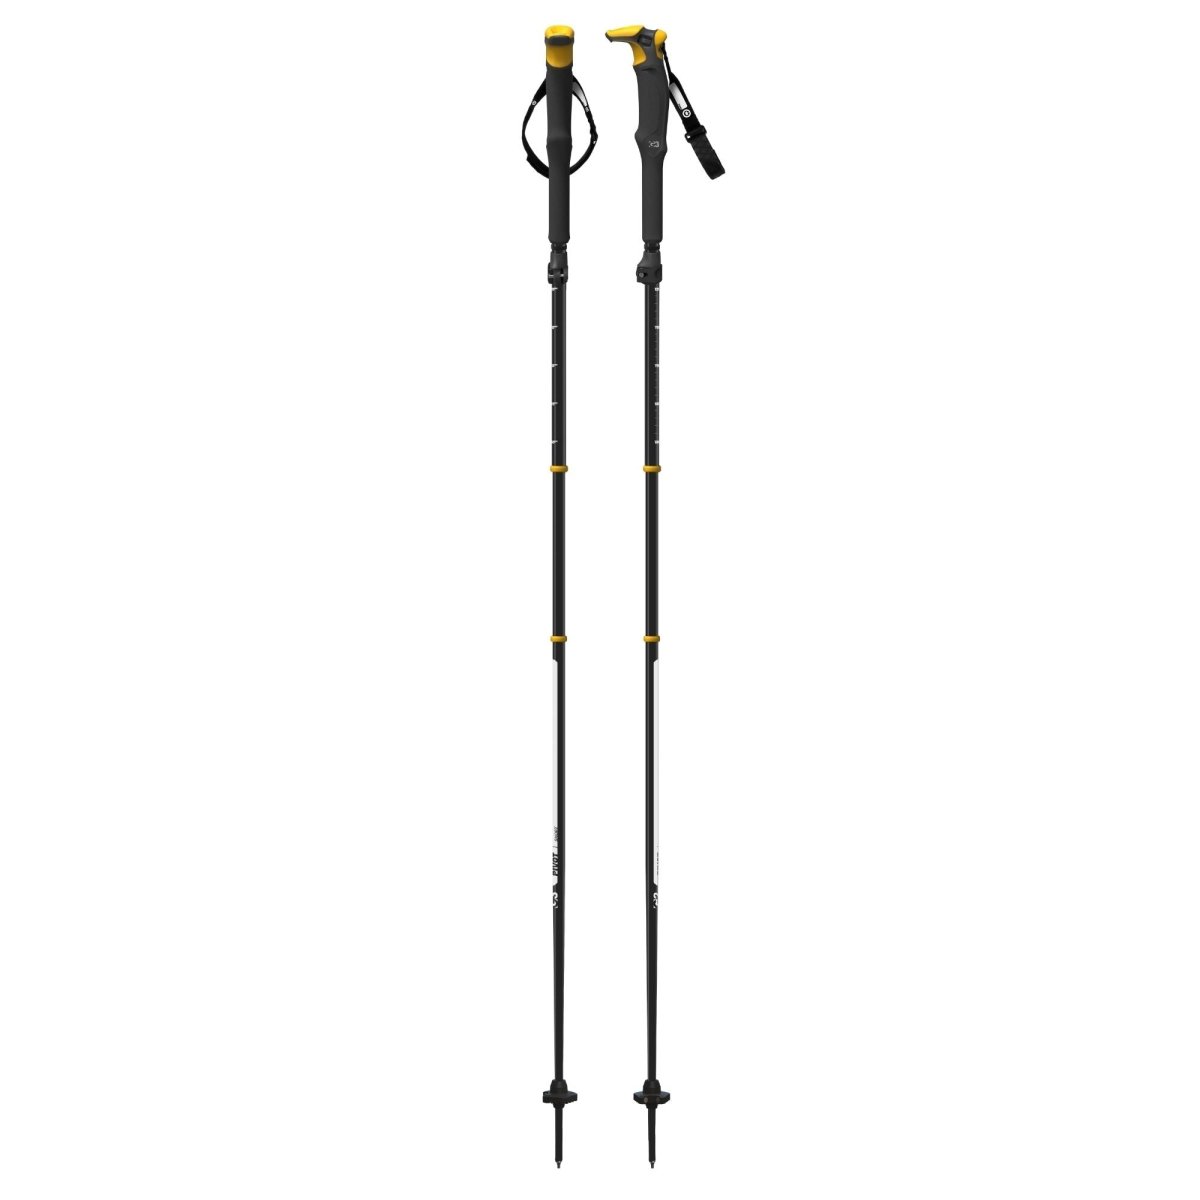 PIVOT TREK Poles - G3 Store [CAD] – G3 Store Canada